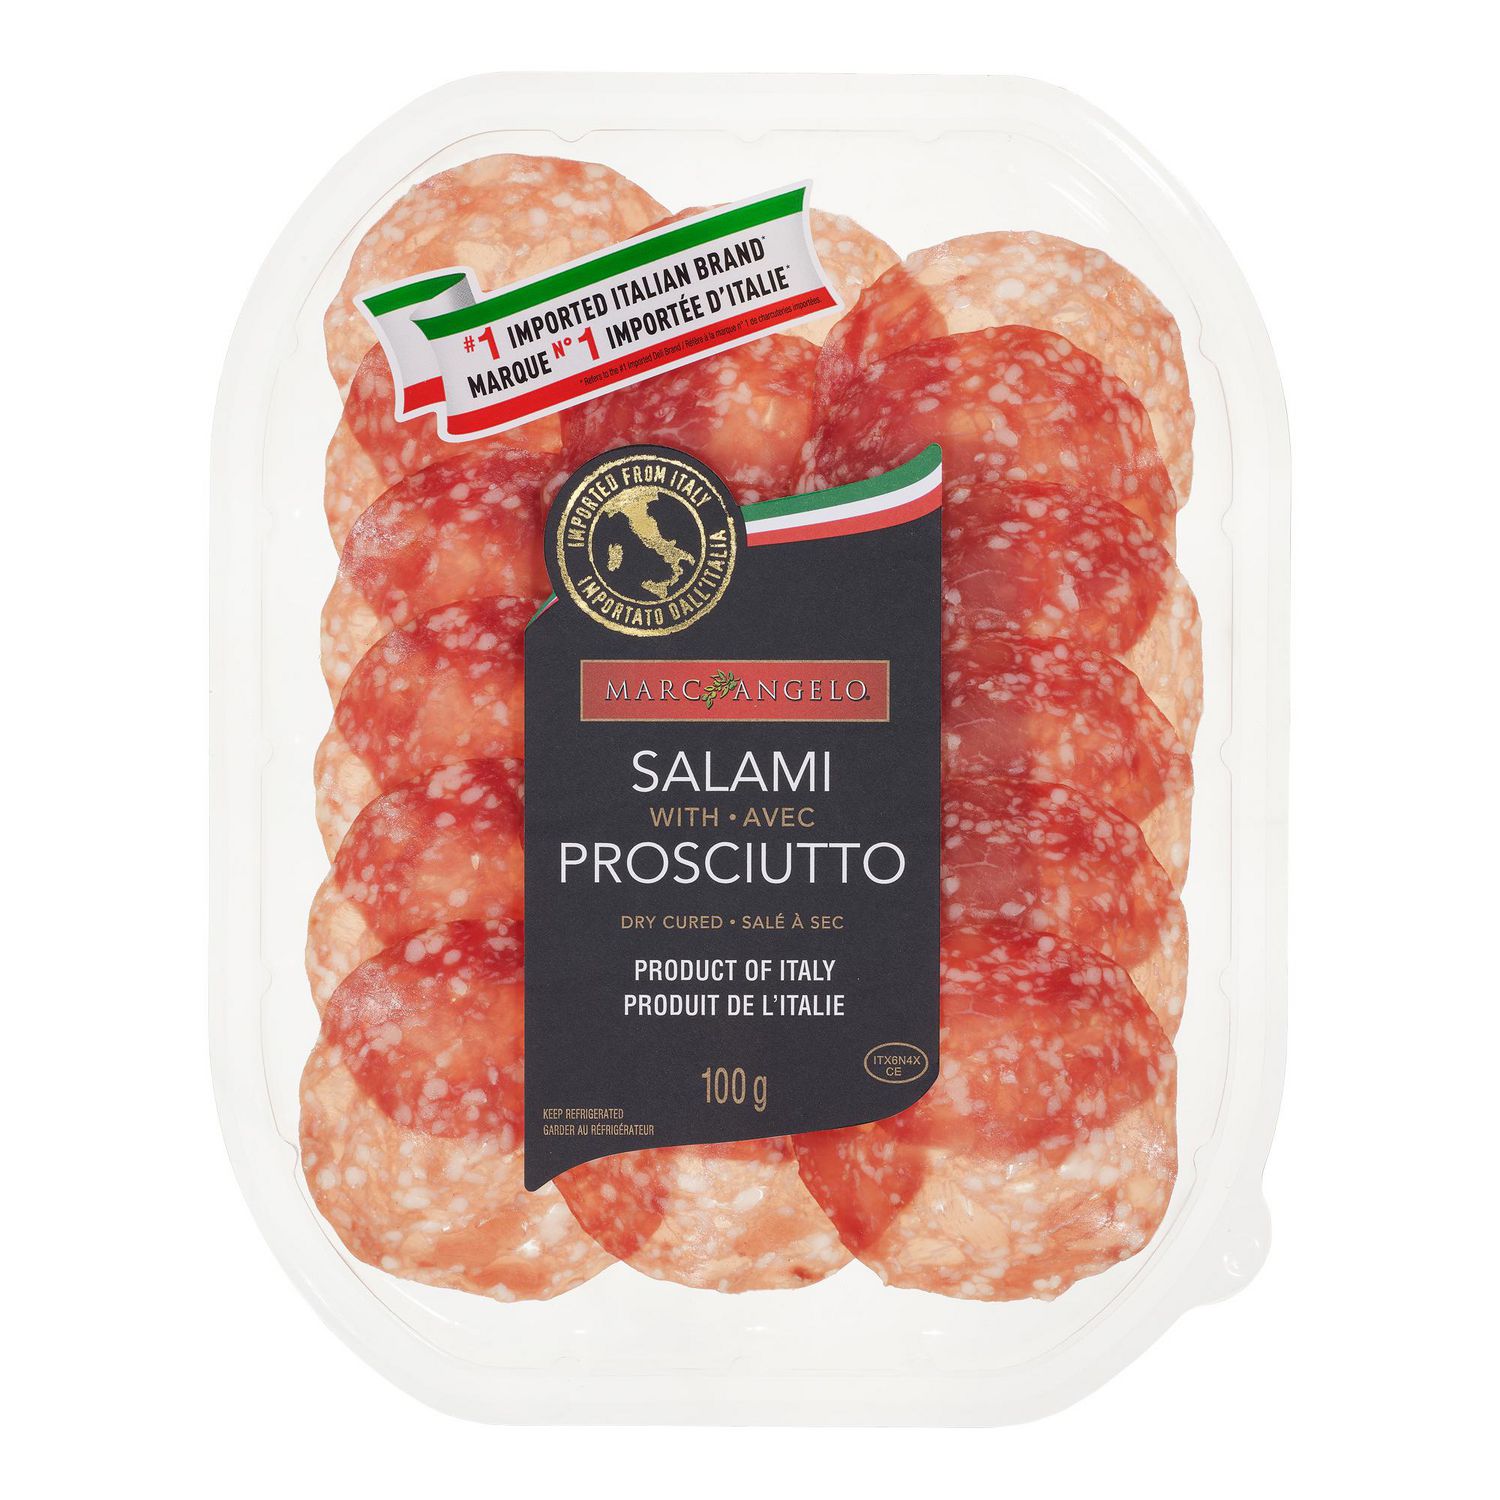 Marcangelo Salami with Prosciutto, sliced | Walmart Canada